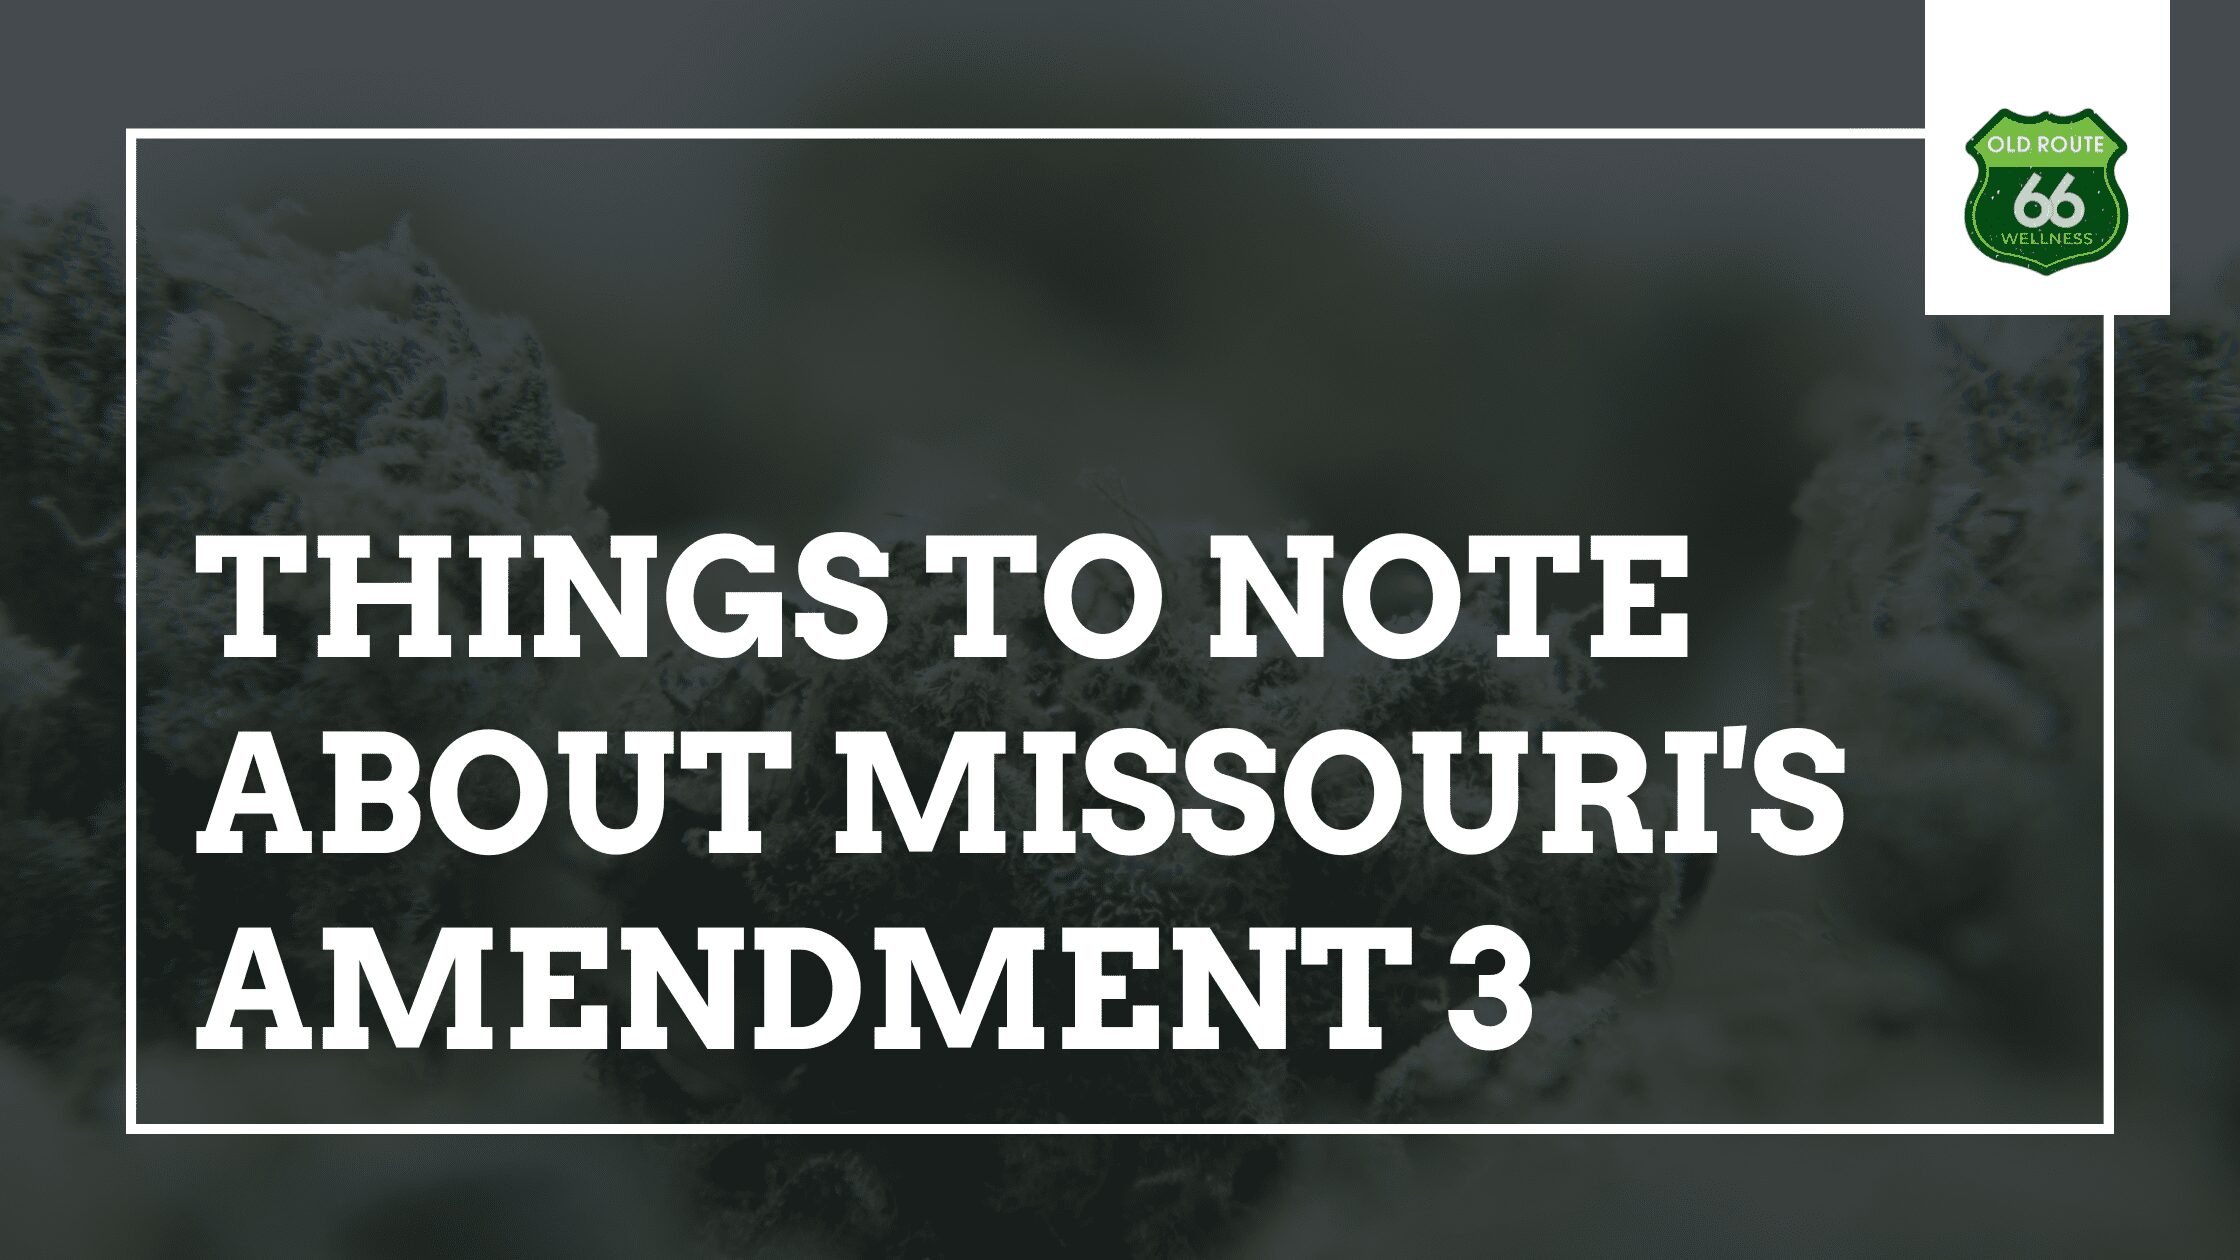 Things to Note About Missouri's Amendment 3 about Recreational Marijuana